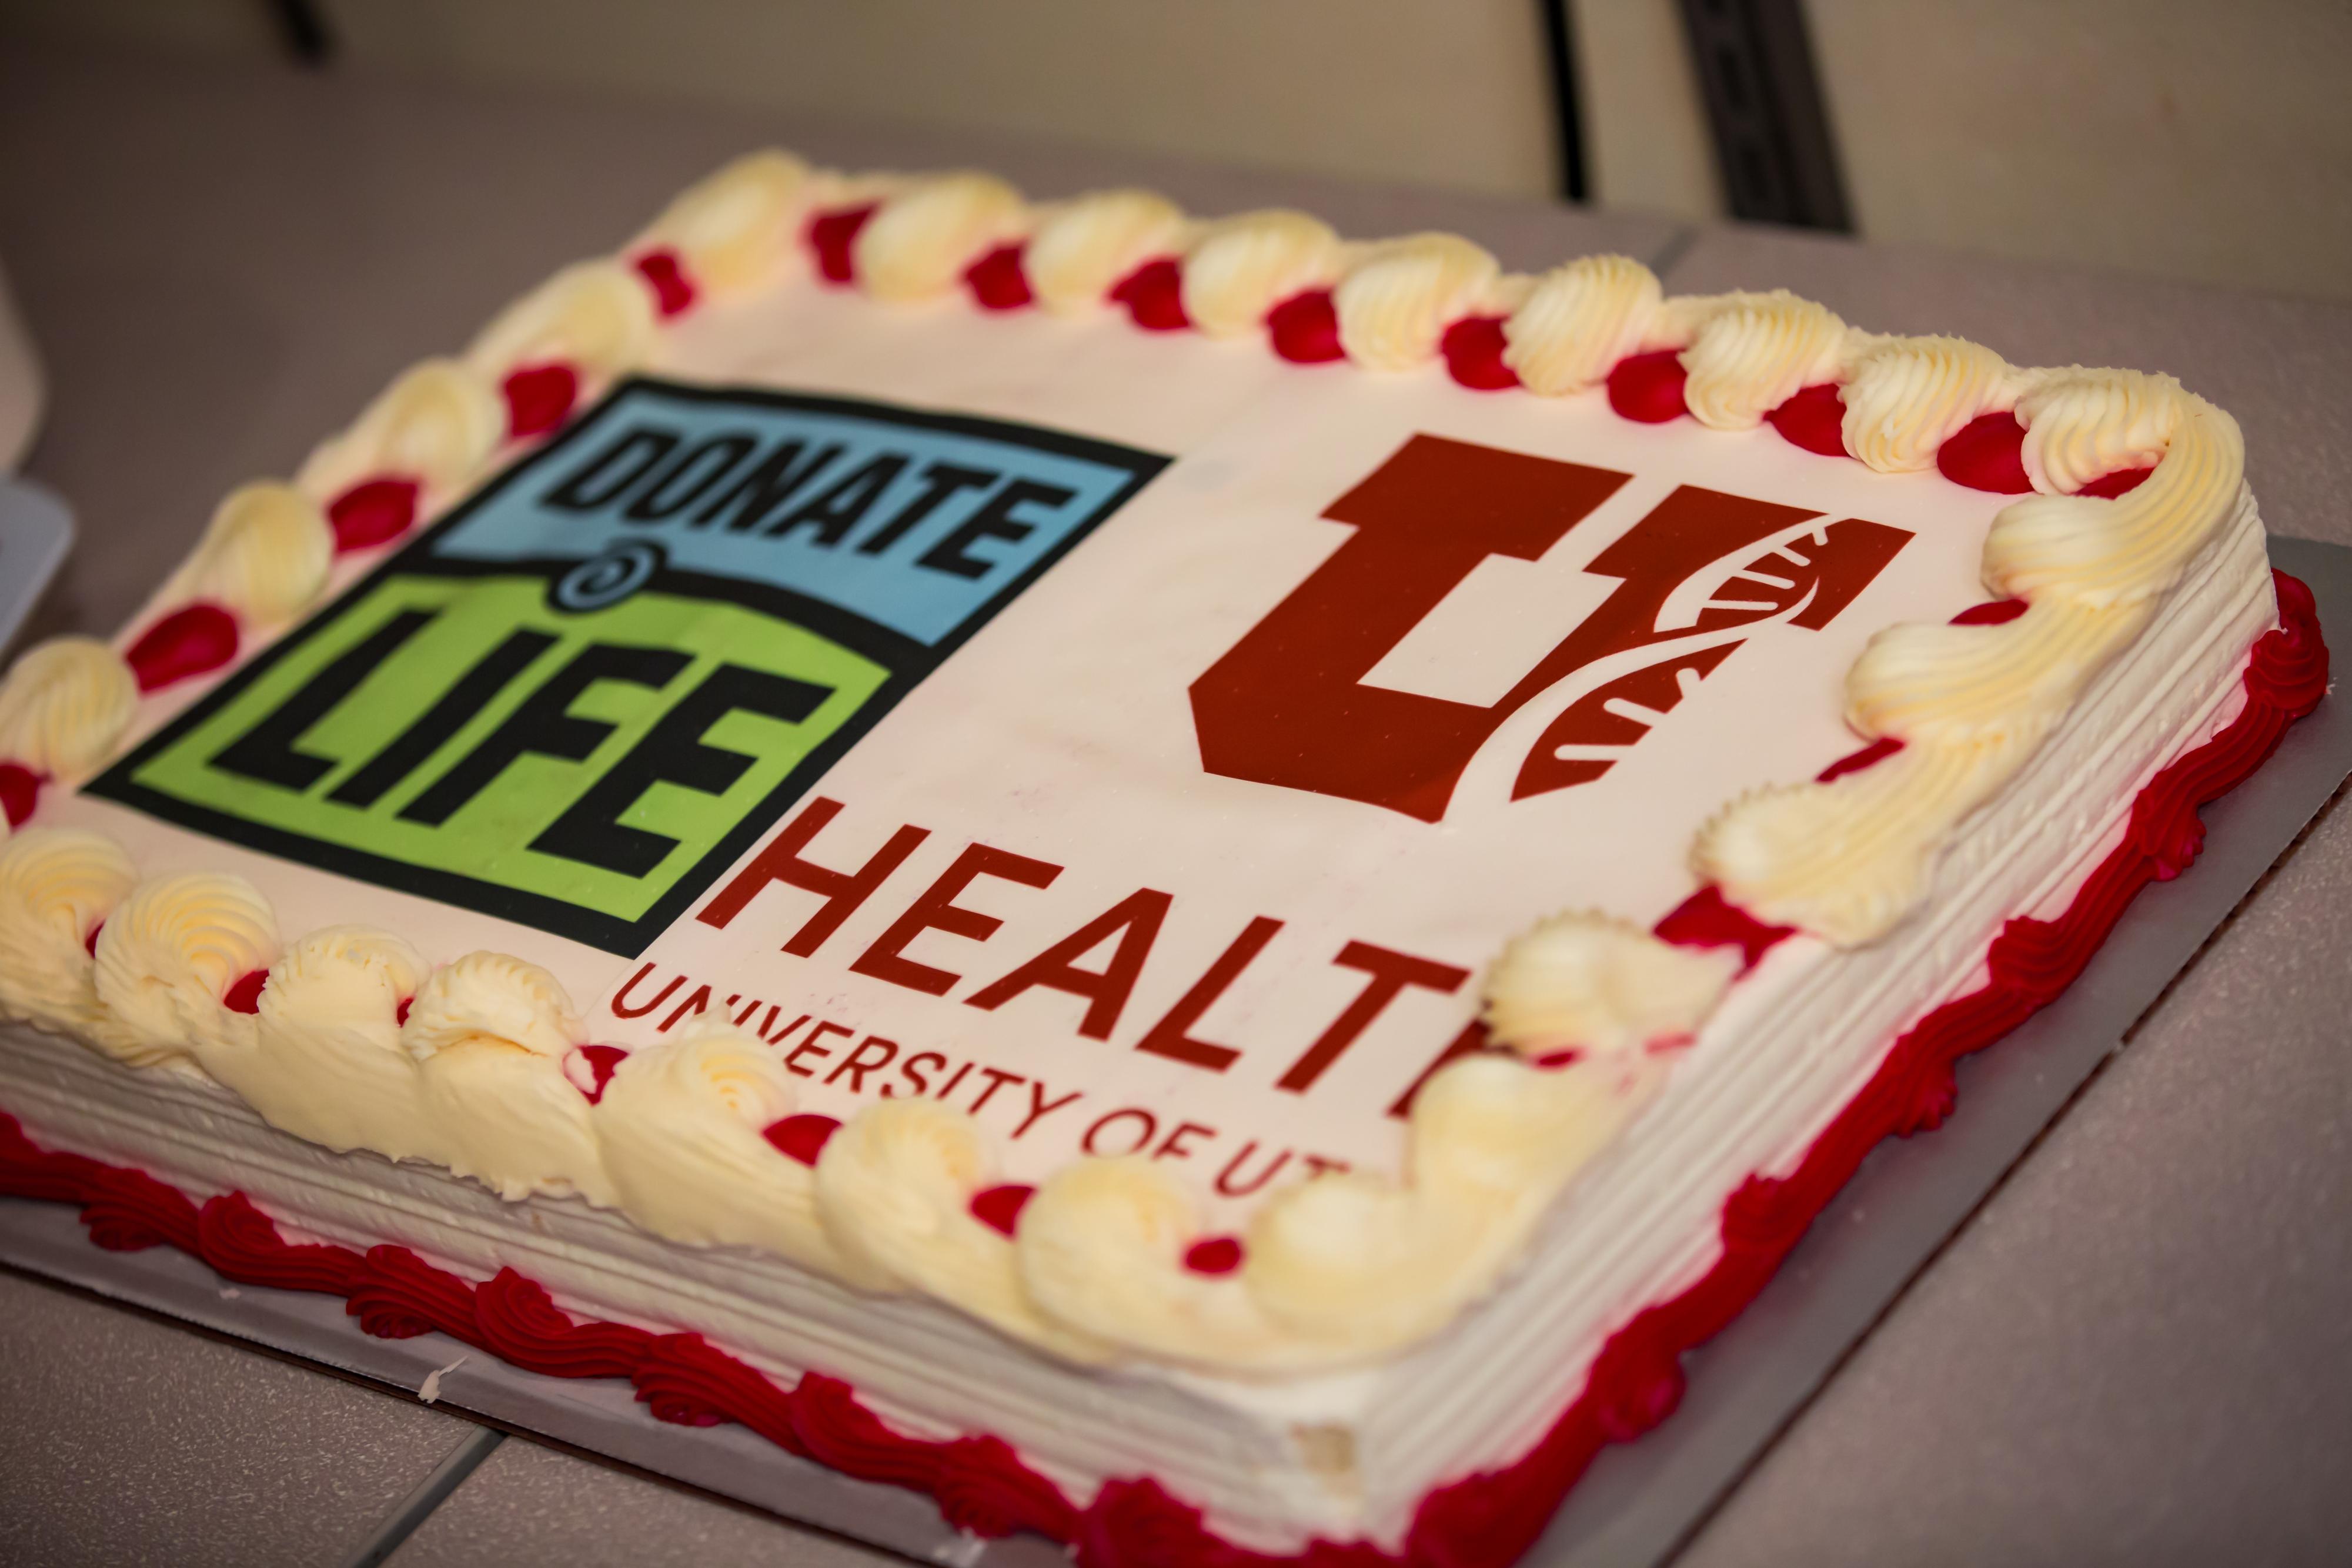 Transplant Donate Life and U Health Cake